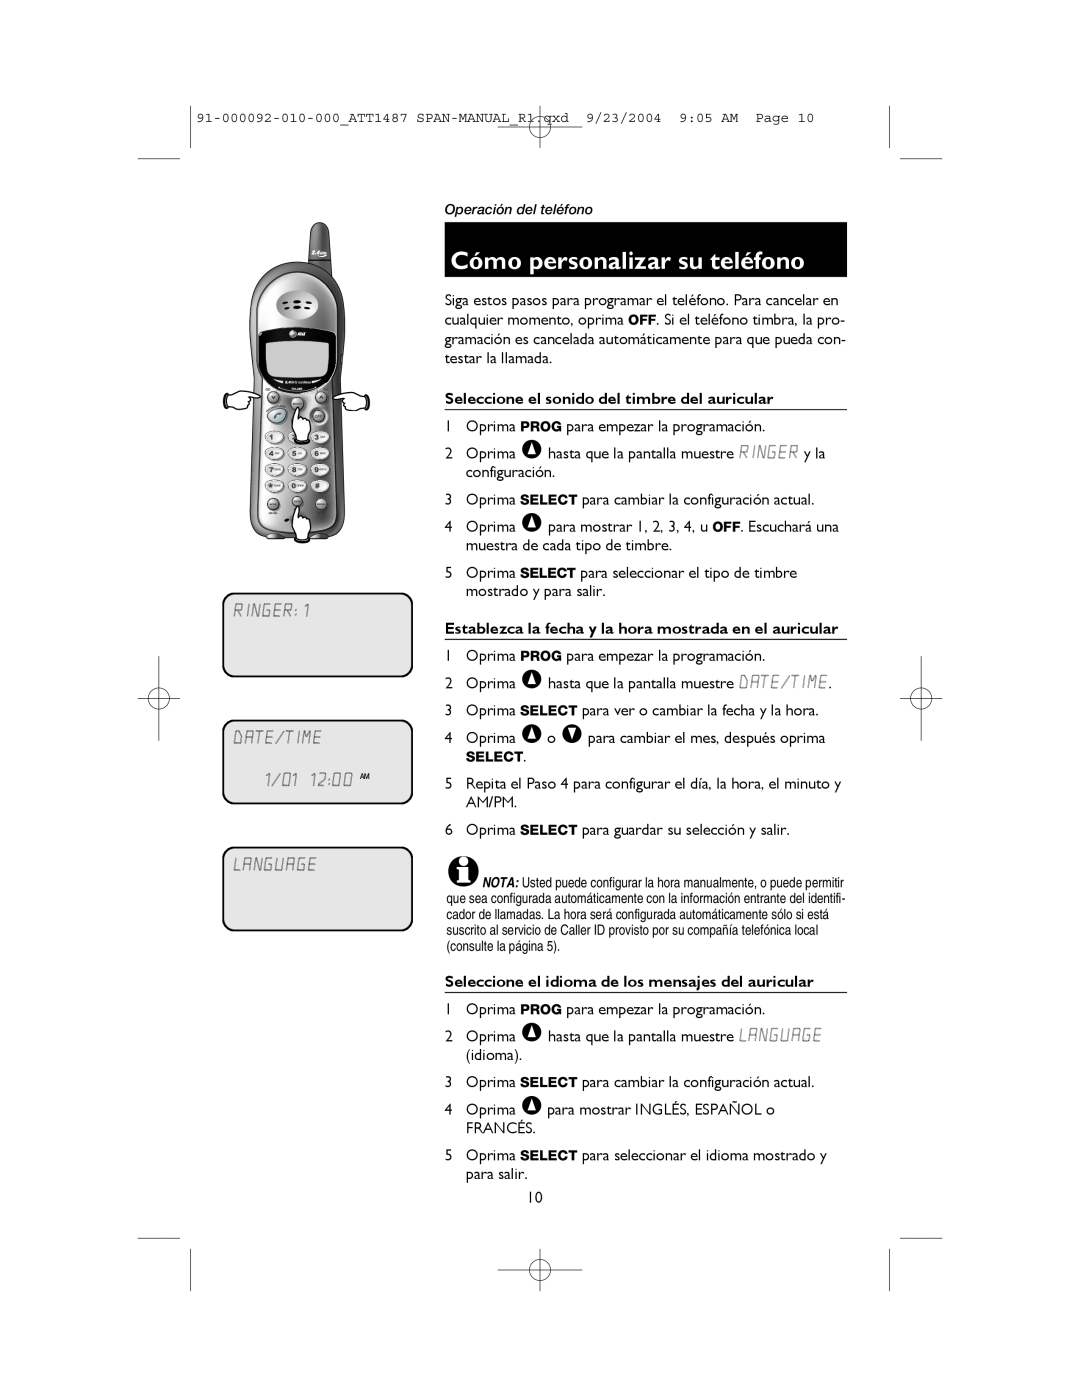 AT&T 1487, 1187 manual Cómo personalizar su teléfono, RINGER DATE/TIME 1/01 1200 AM LANGUAGE 